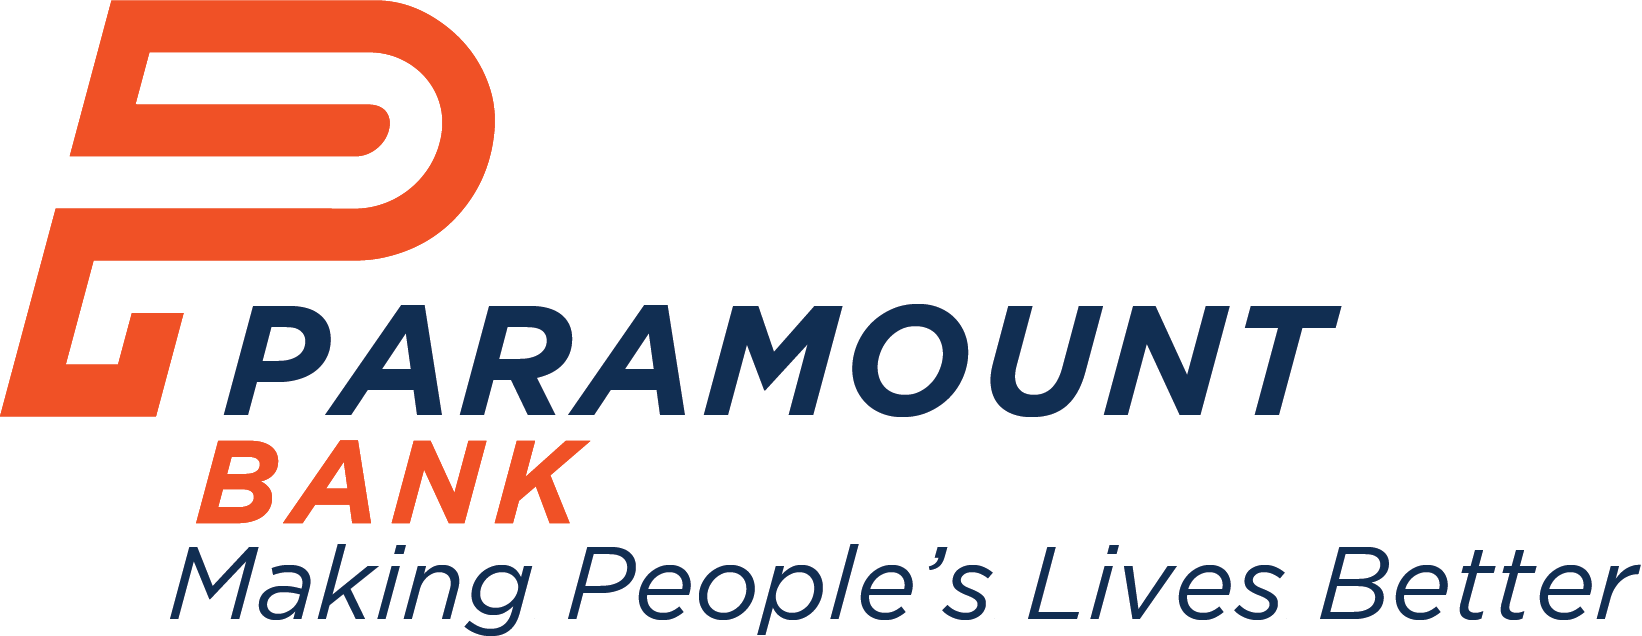 Paramount Bank